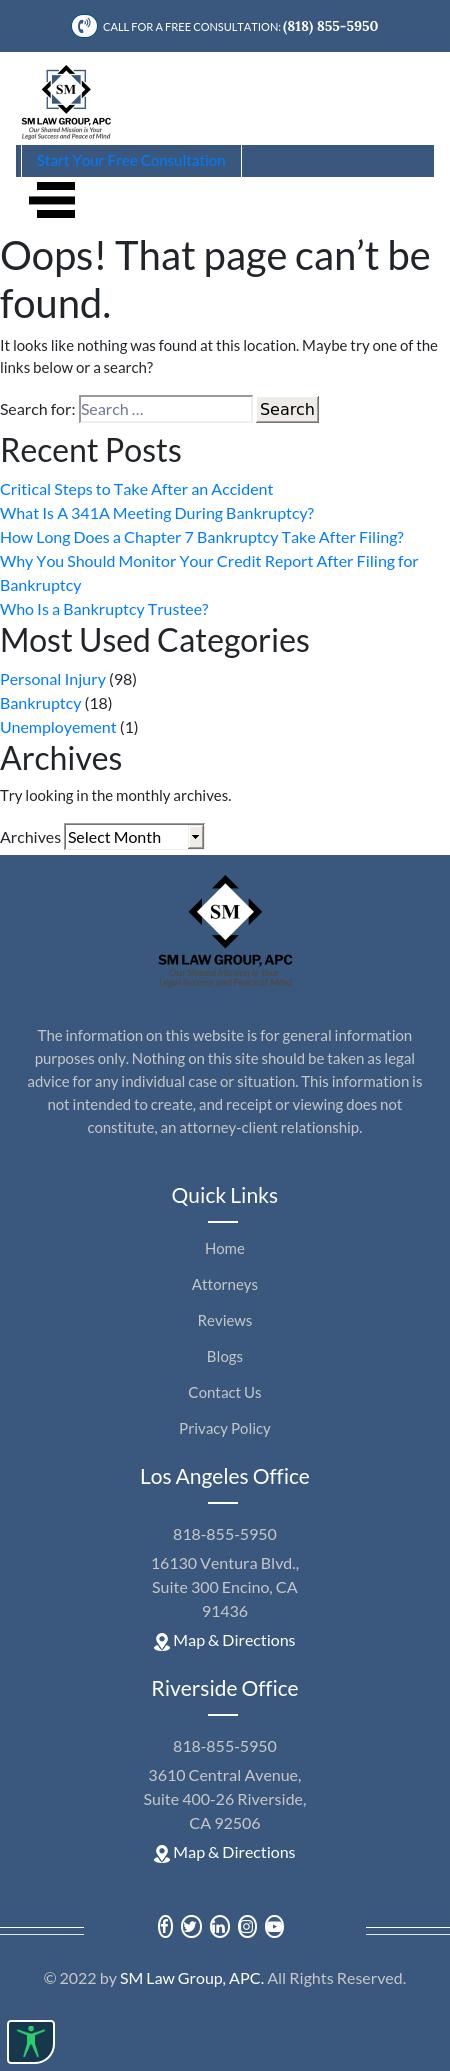 SM Law Group, APC - Riverside CA Lawyers